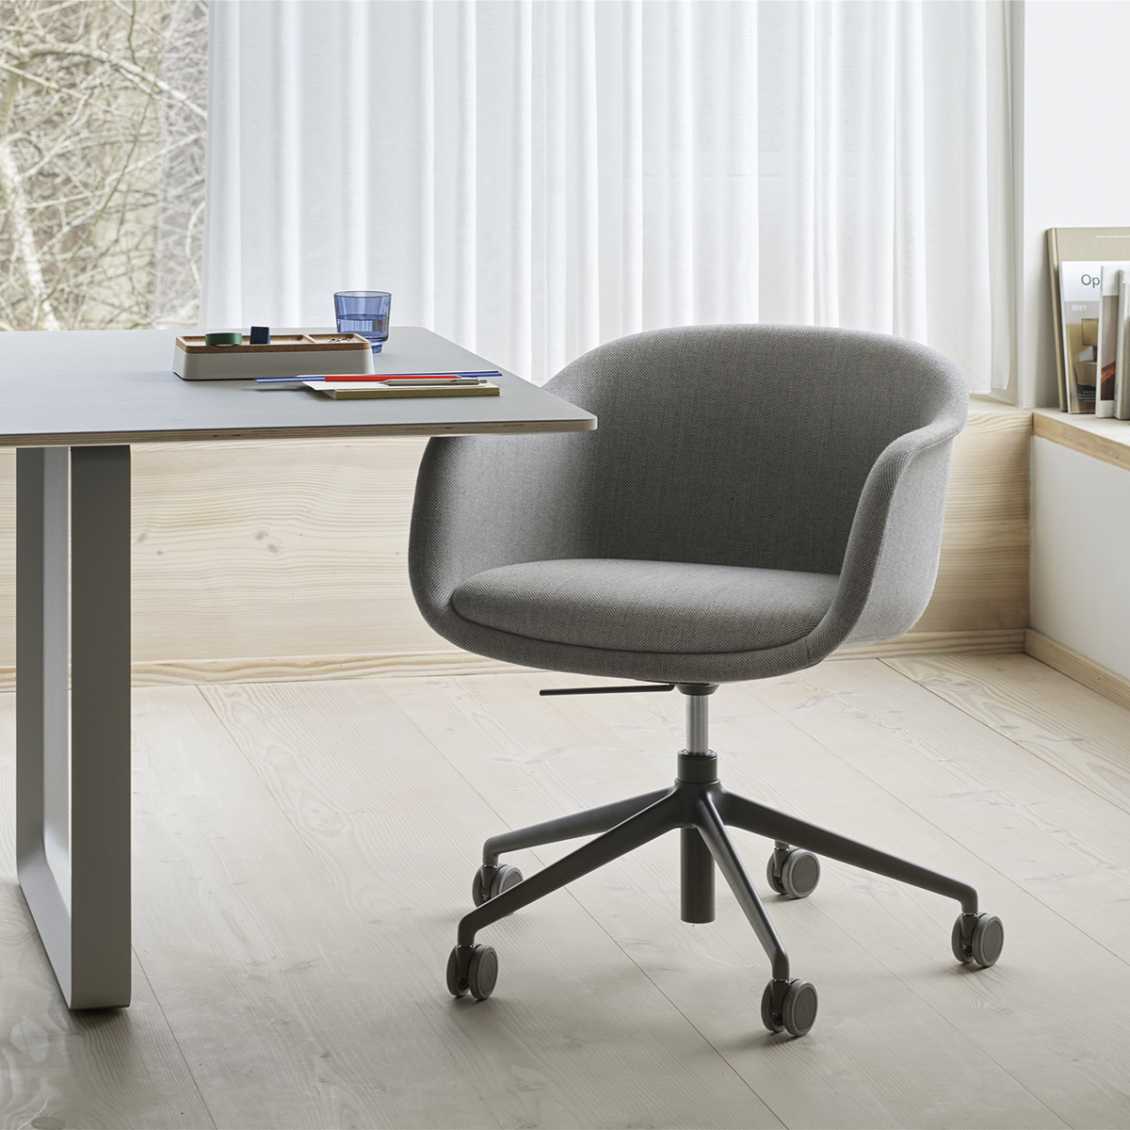 https://www.fundesign.nl/media/catalog/product/m/u/muuto-fiber-conference-armchair-with-wheels-sfeer1_4.jpg